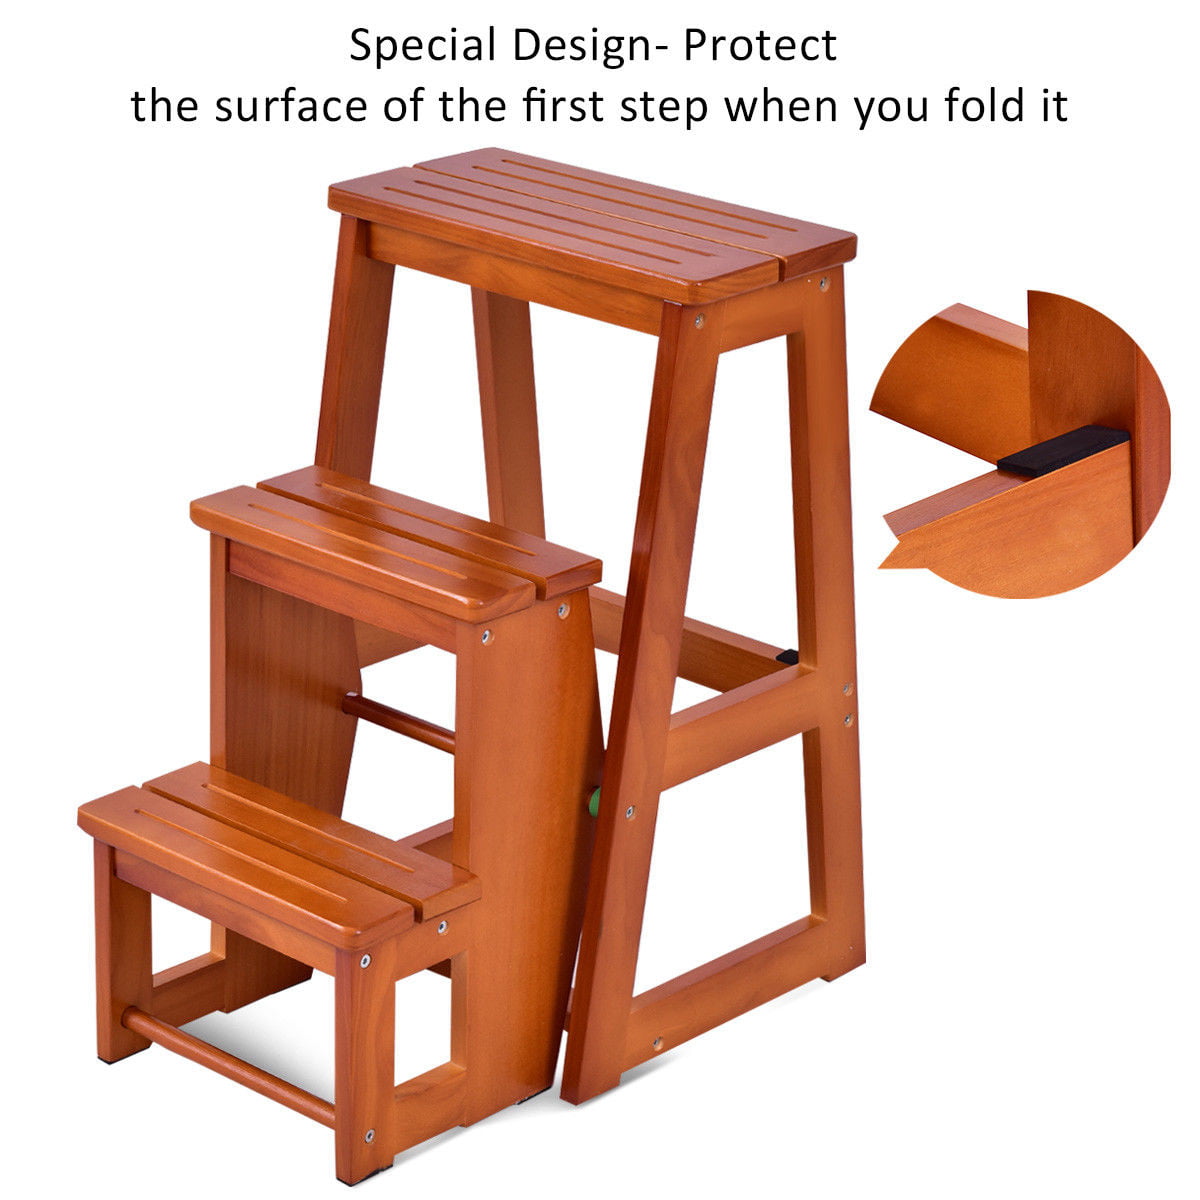 Giantex 3 Tier Folding Step Stool Multi-Functional Ladder Chair Bench Seat Utility Walnut